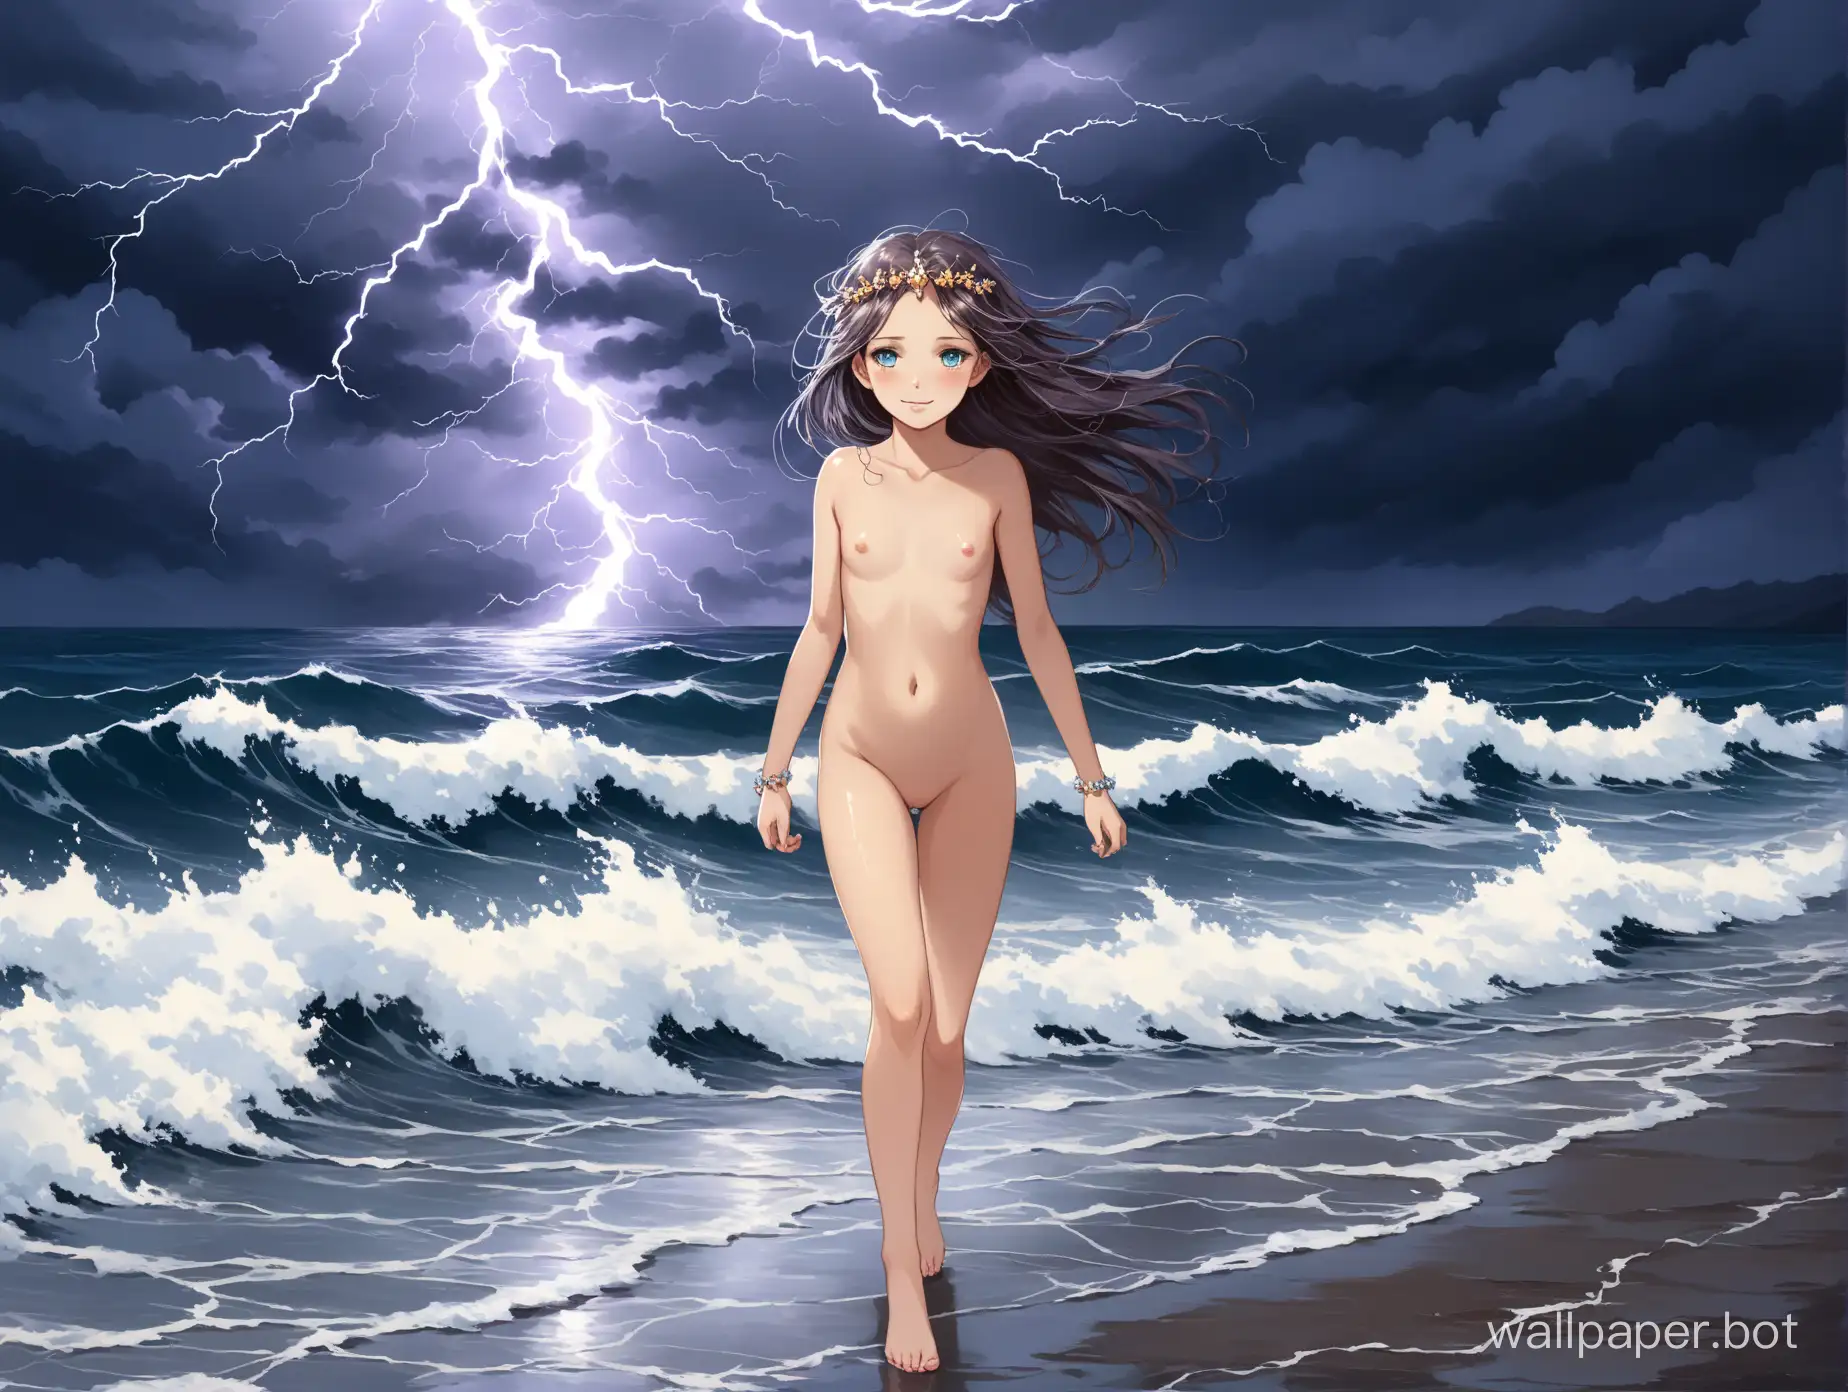 Cheerful-12YearOld-Storm-Goddess-Walking-on-Sea-Waves-Amid-Lightning-Storm